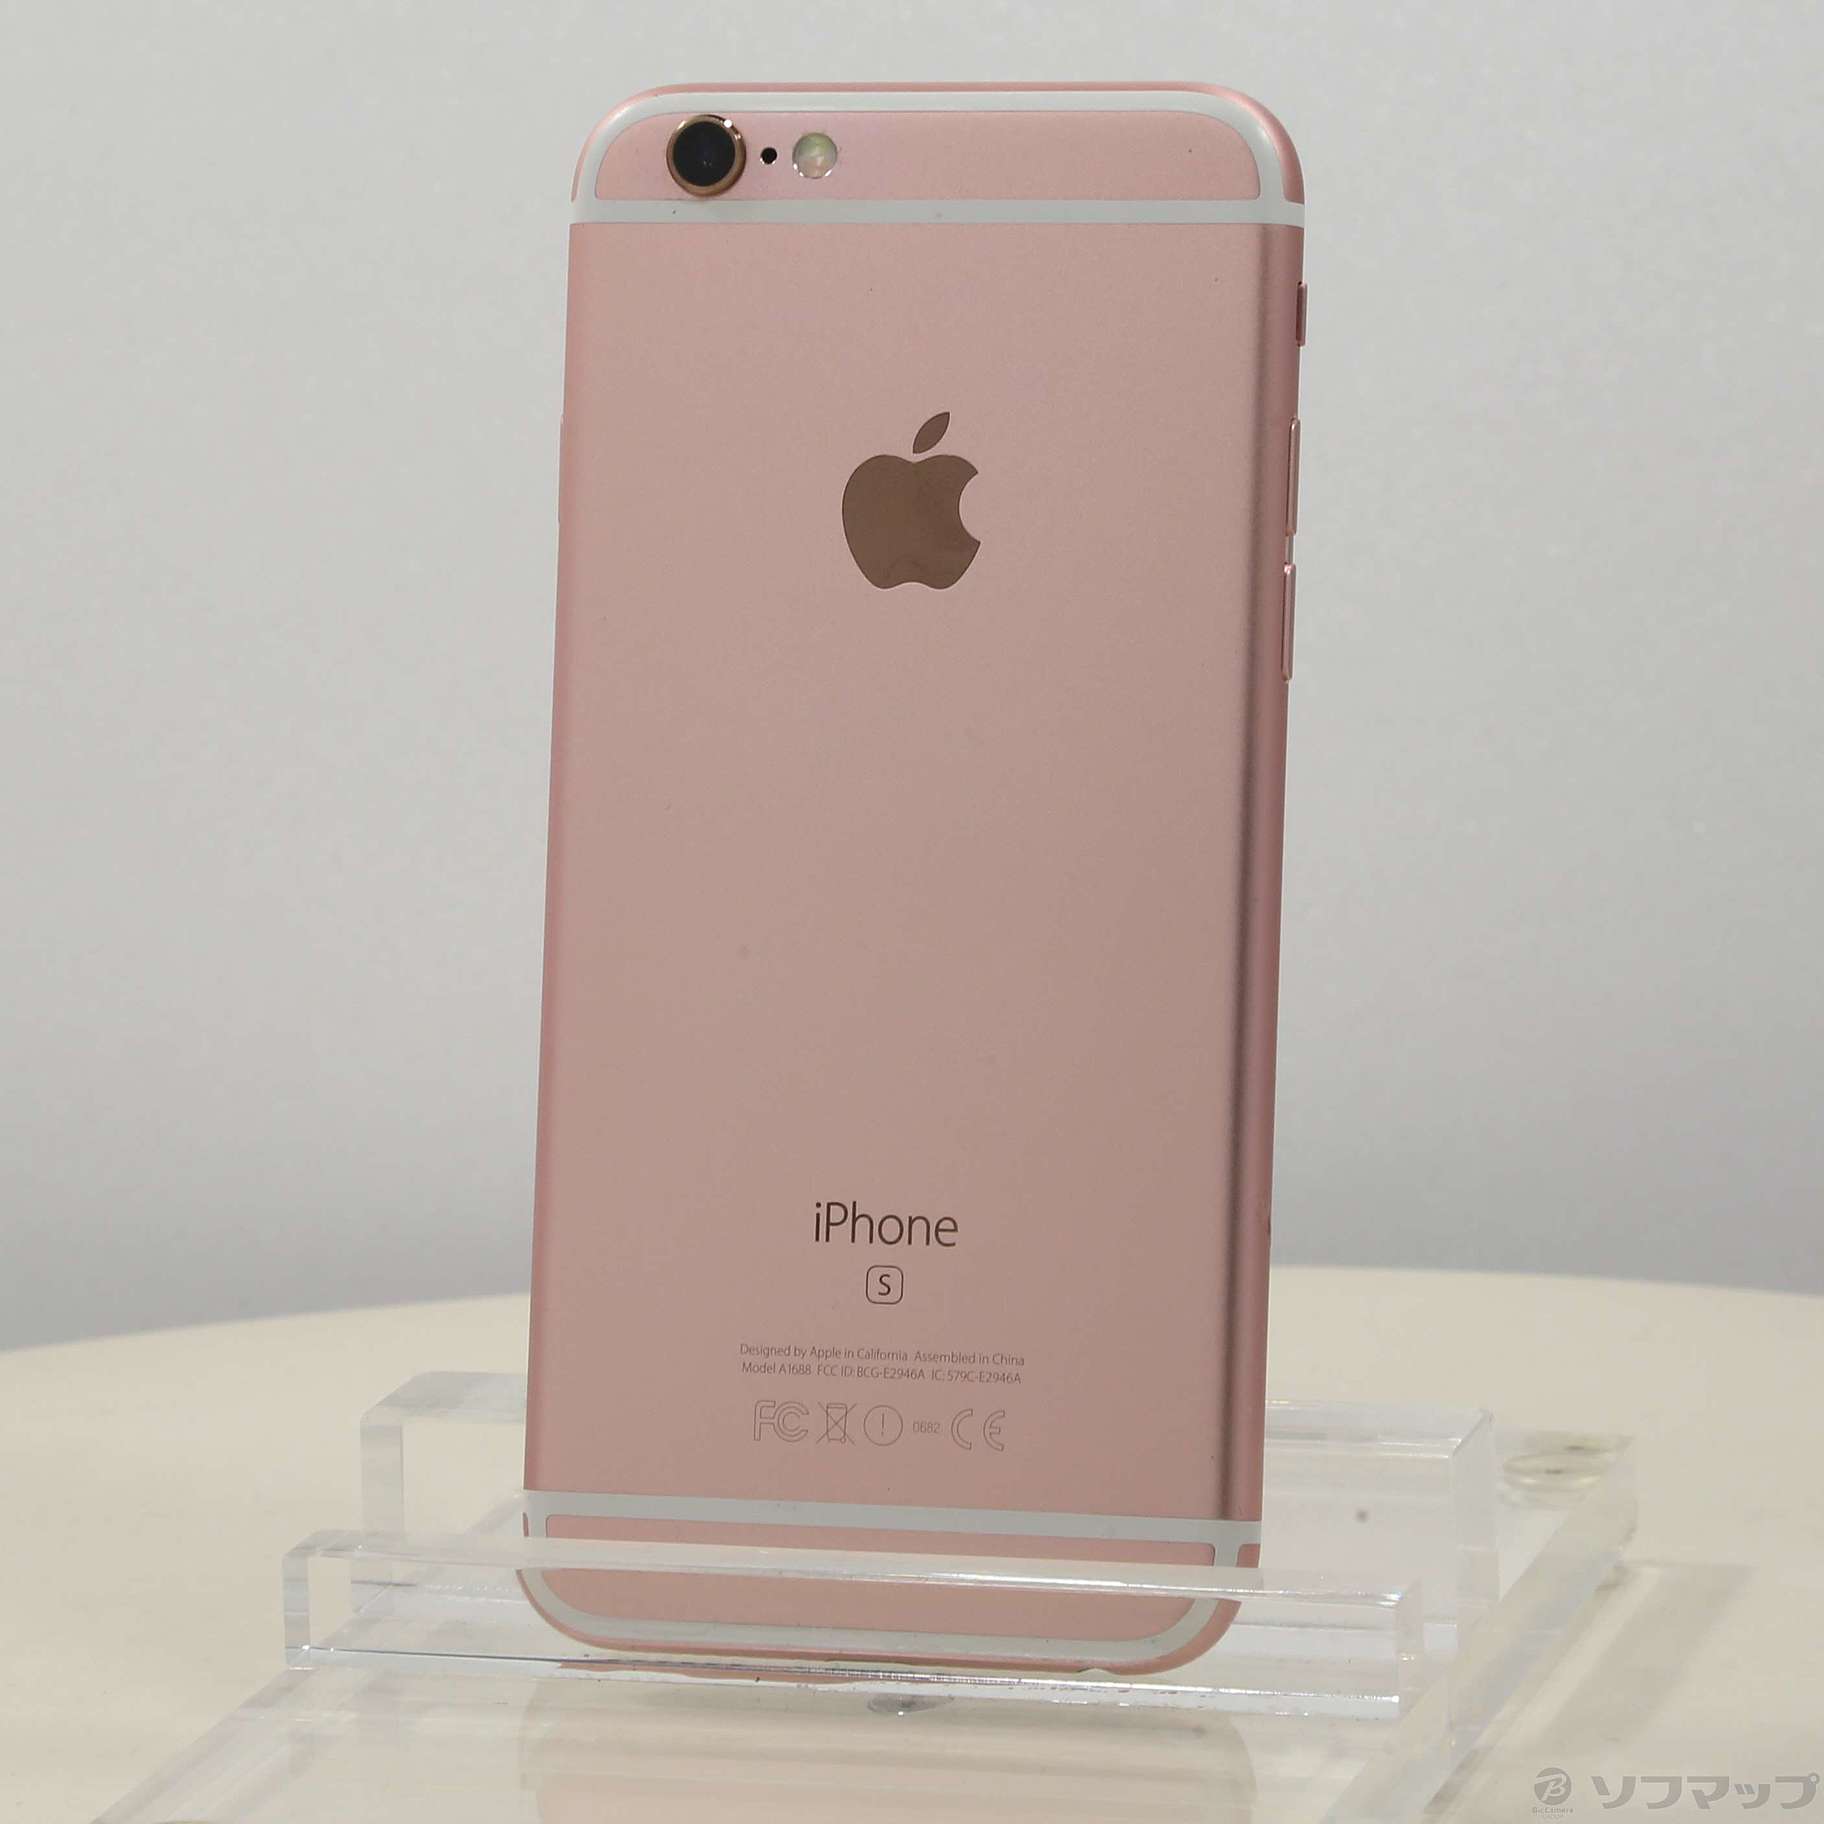 iPhone 6s Gold 64 GB simフリー